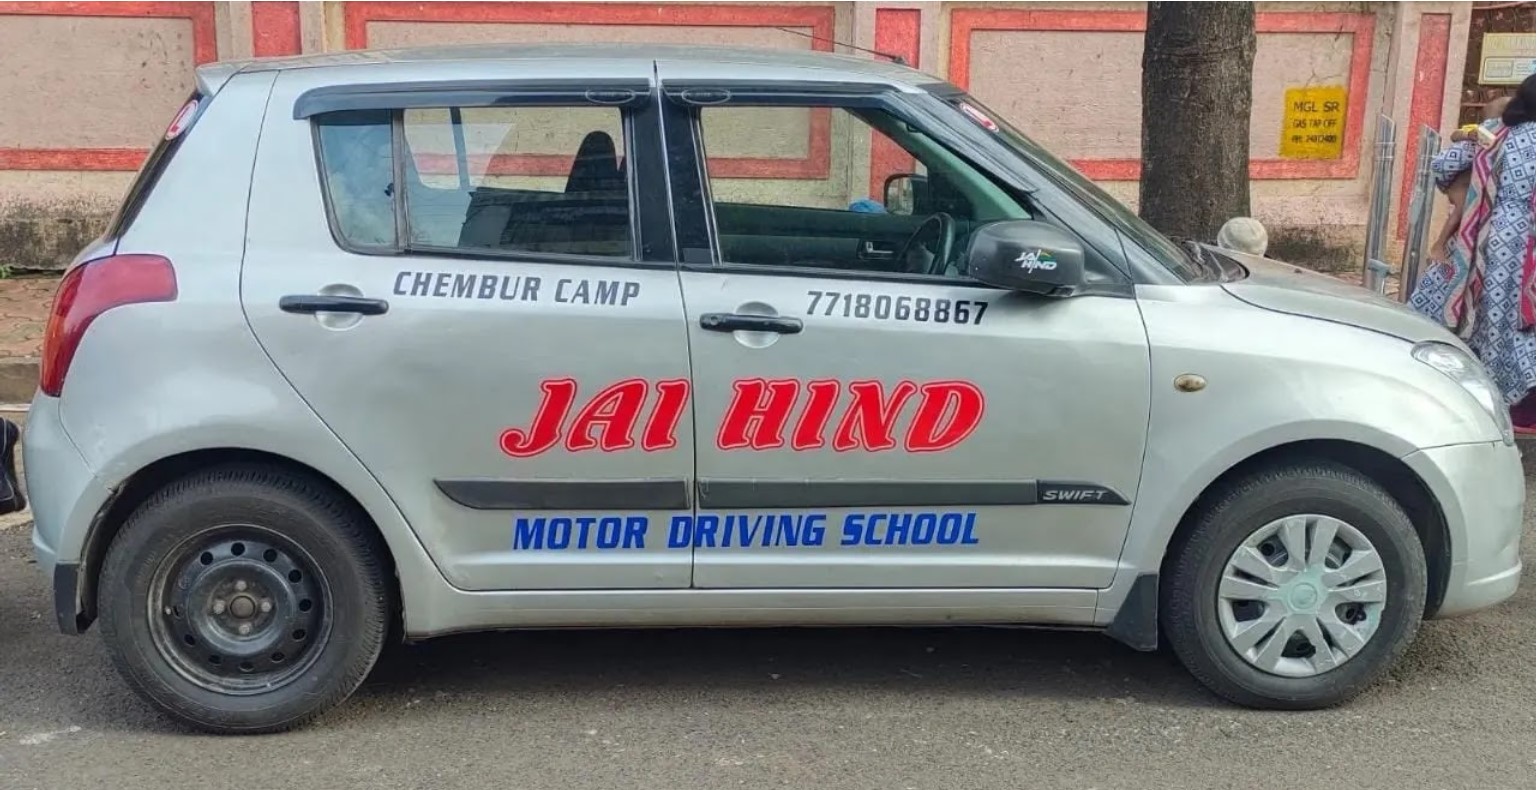 Jai Hind Motor Driving School in Chembur